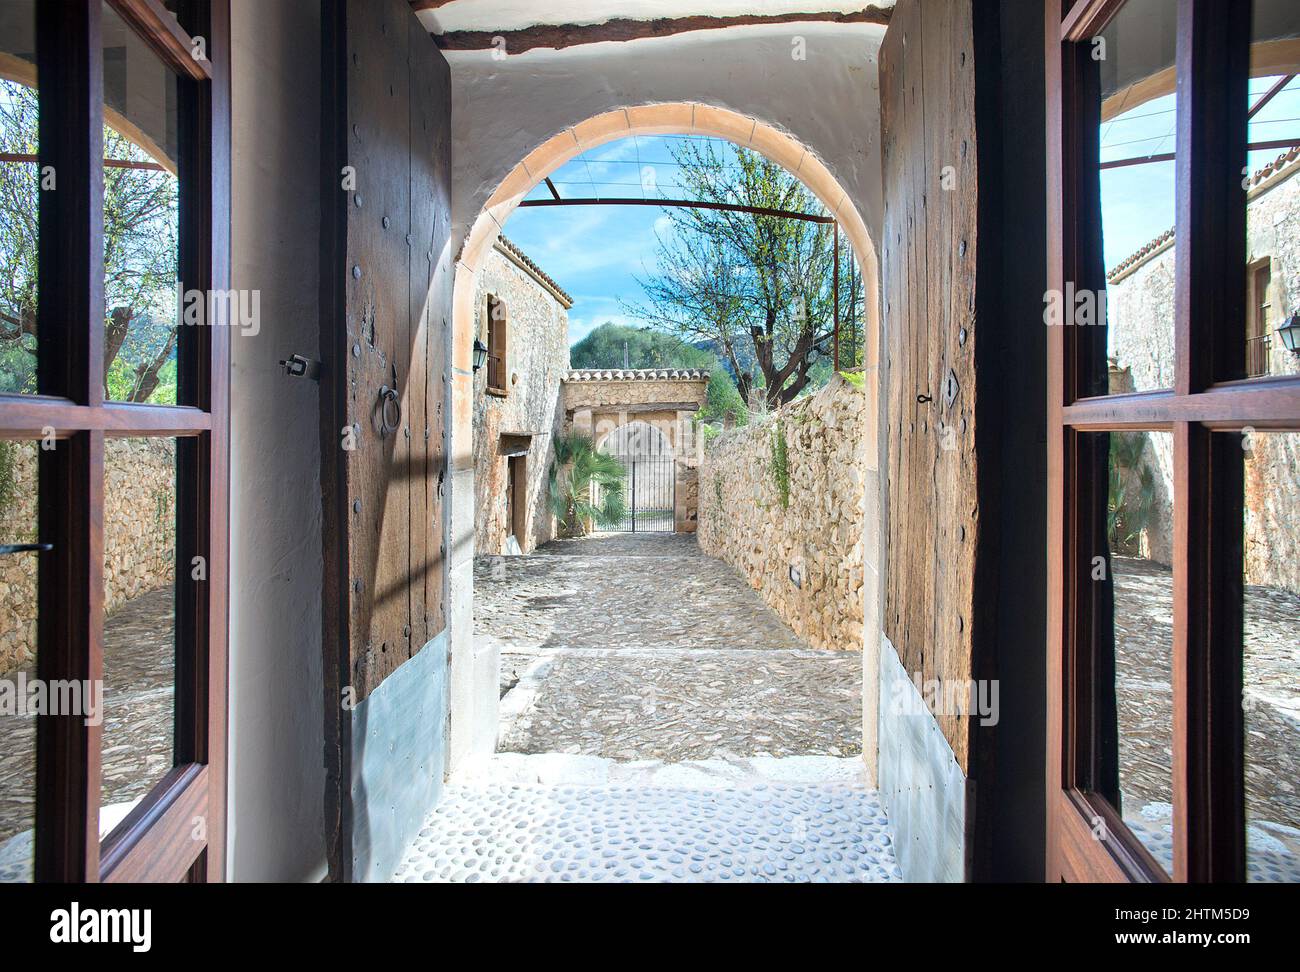 View from doorway of traditional finca, Majorca, Balearics, Spain Stock Photo